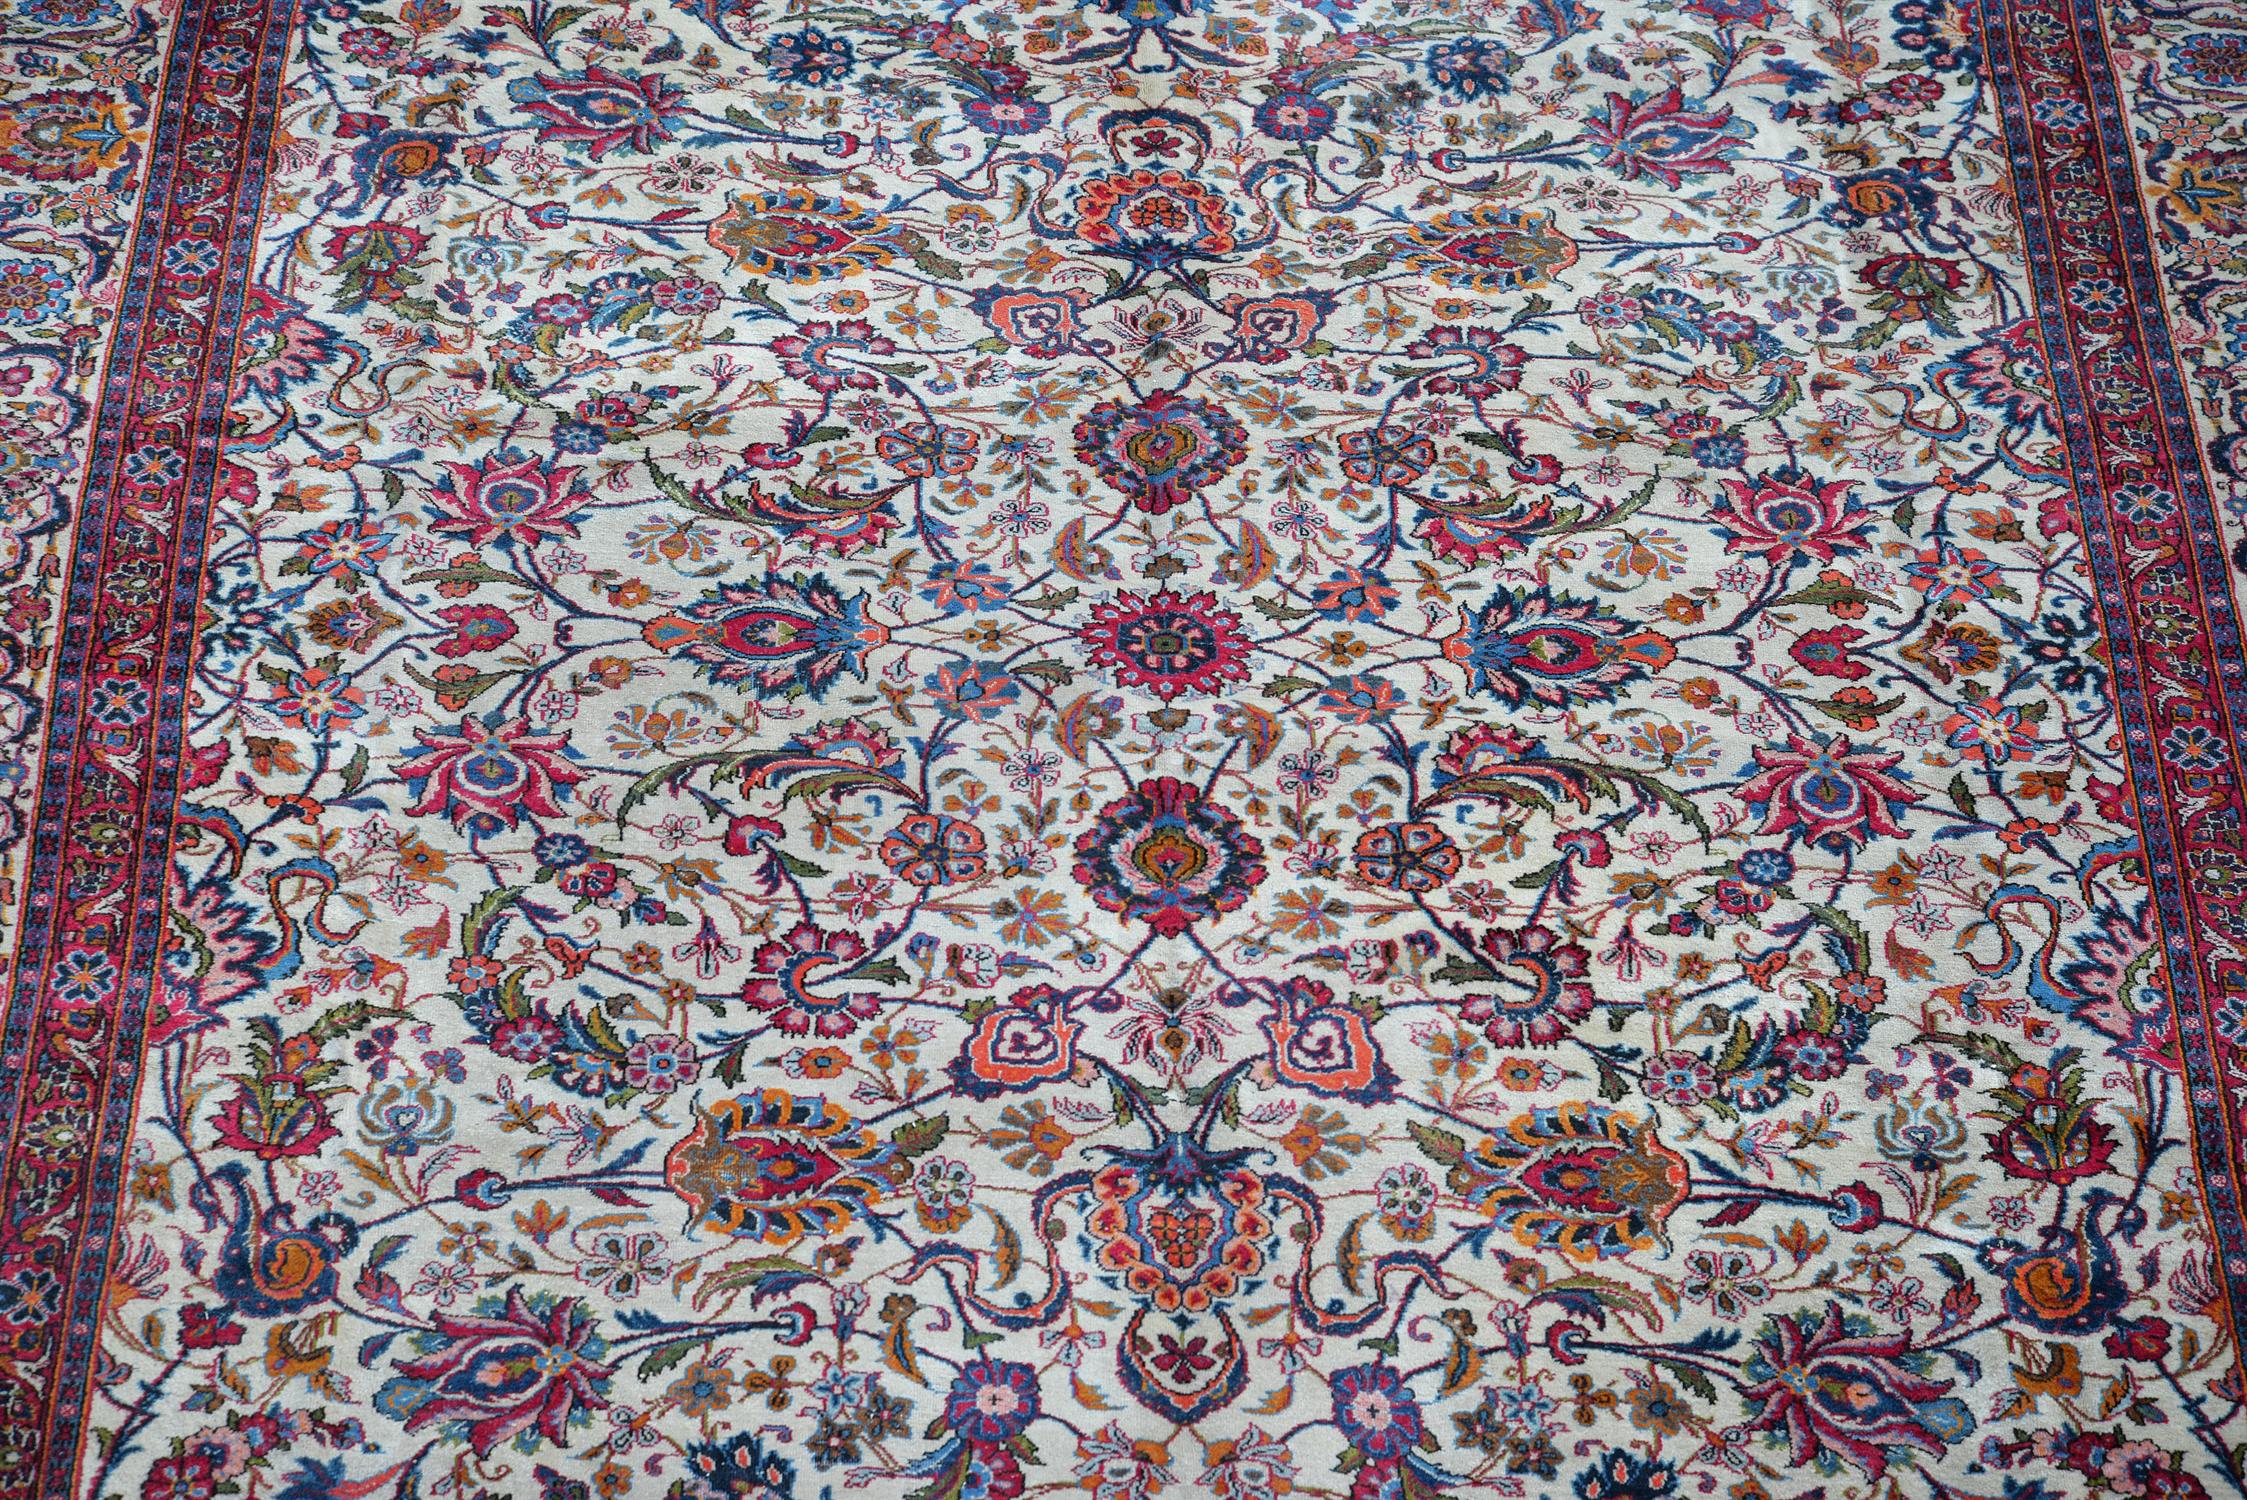 A Kashan carpet, approximately 388 x 280cm